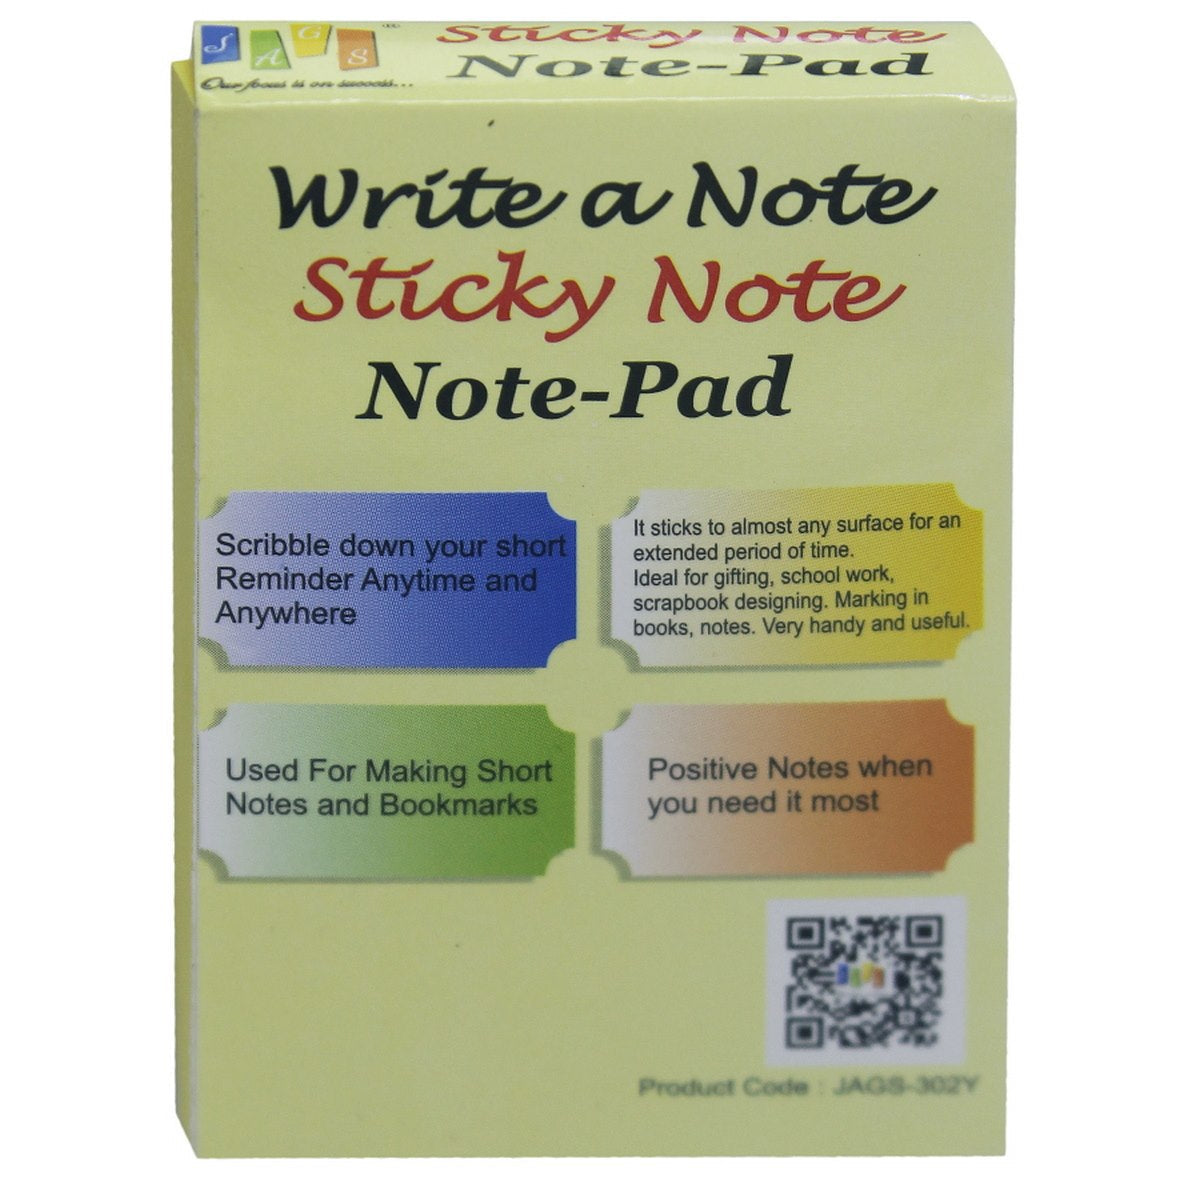 jags-mumbai Sticky Notes Sticky note pad